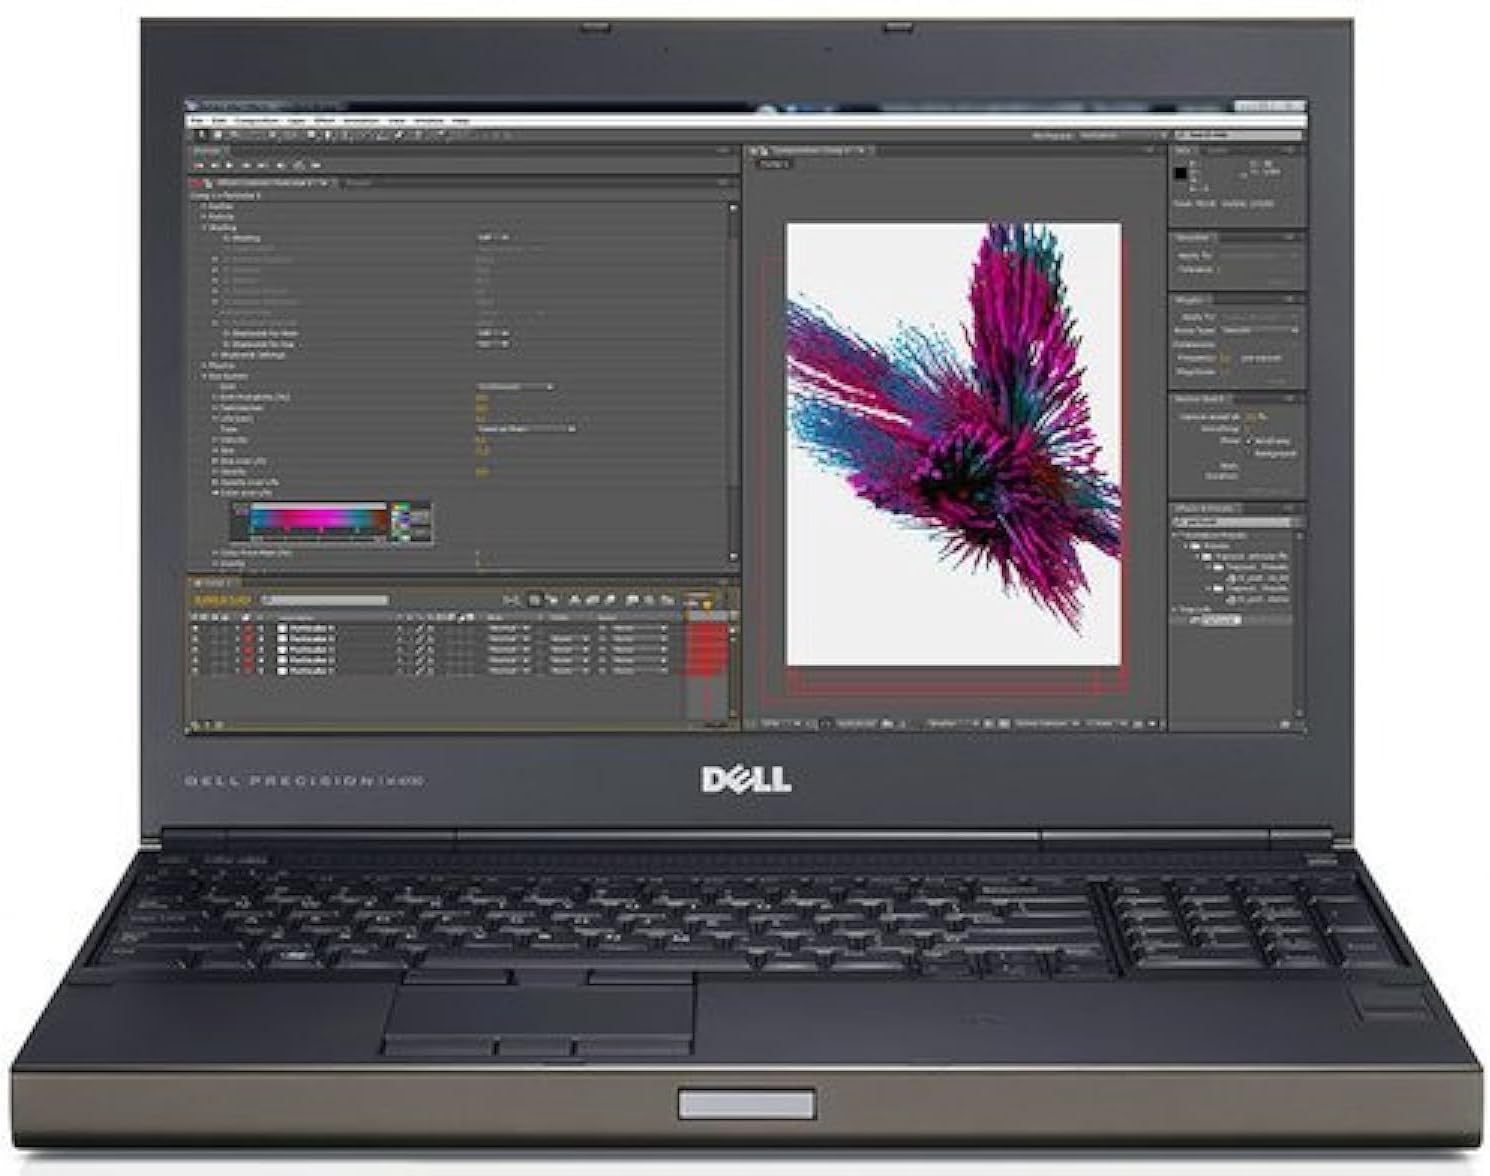 Dell Precision M4700 15.6in Business Laptop NoteBook PC (Intel Ci7-3840QM, 16GB Ram, 1TB HDD + 120GB Brand SSD, Amd FirePro M4000 Graphics, HDMI, CAM, WIFI, DVD-RW) Win 10 (Renewed)